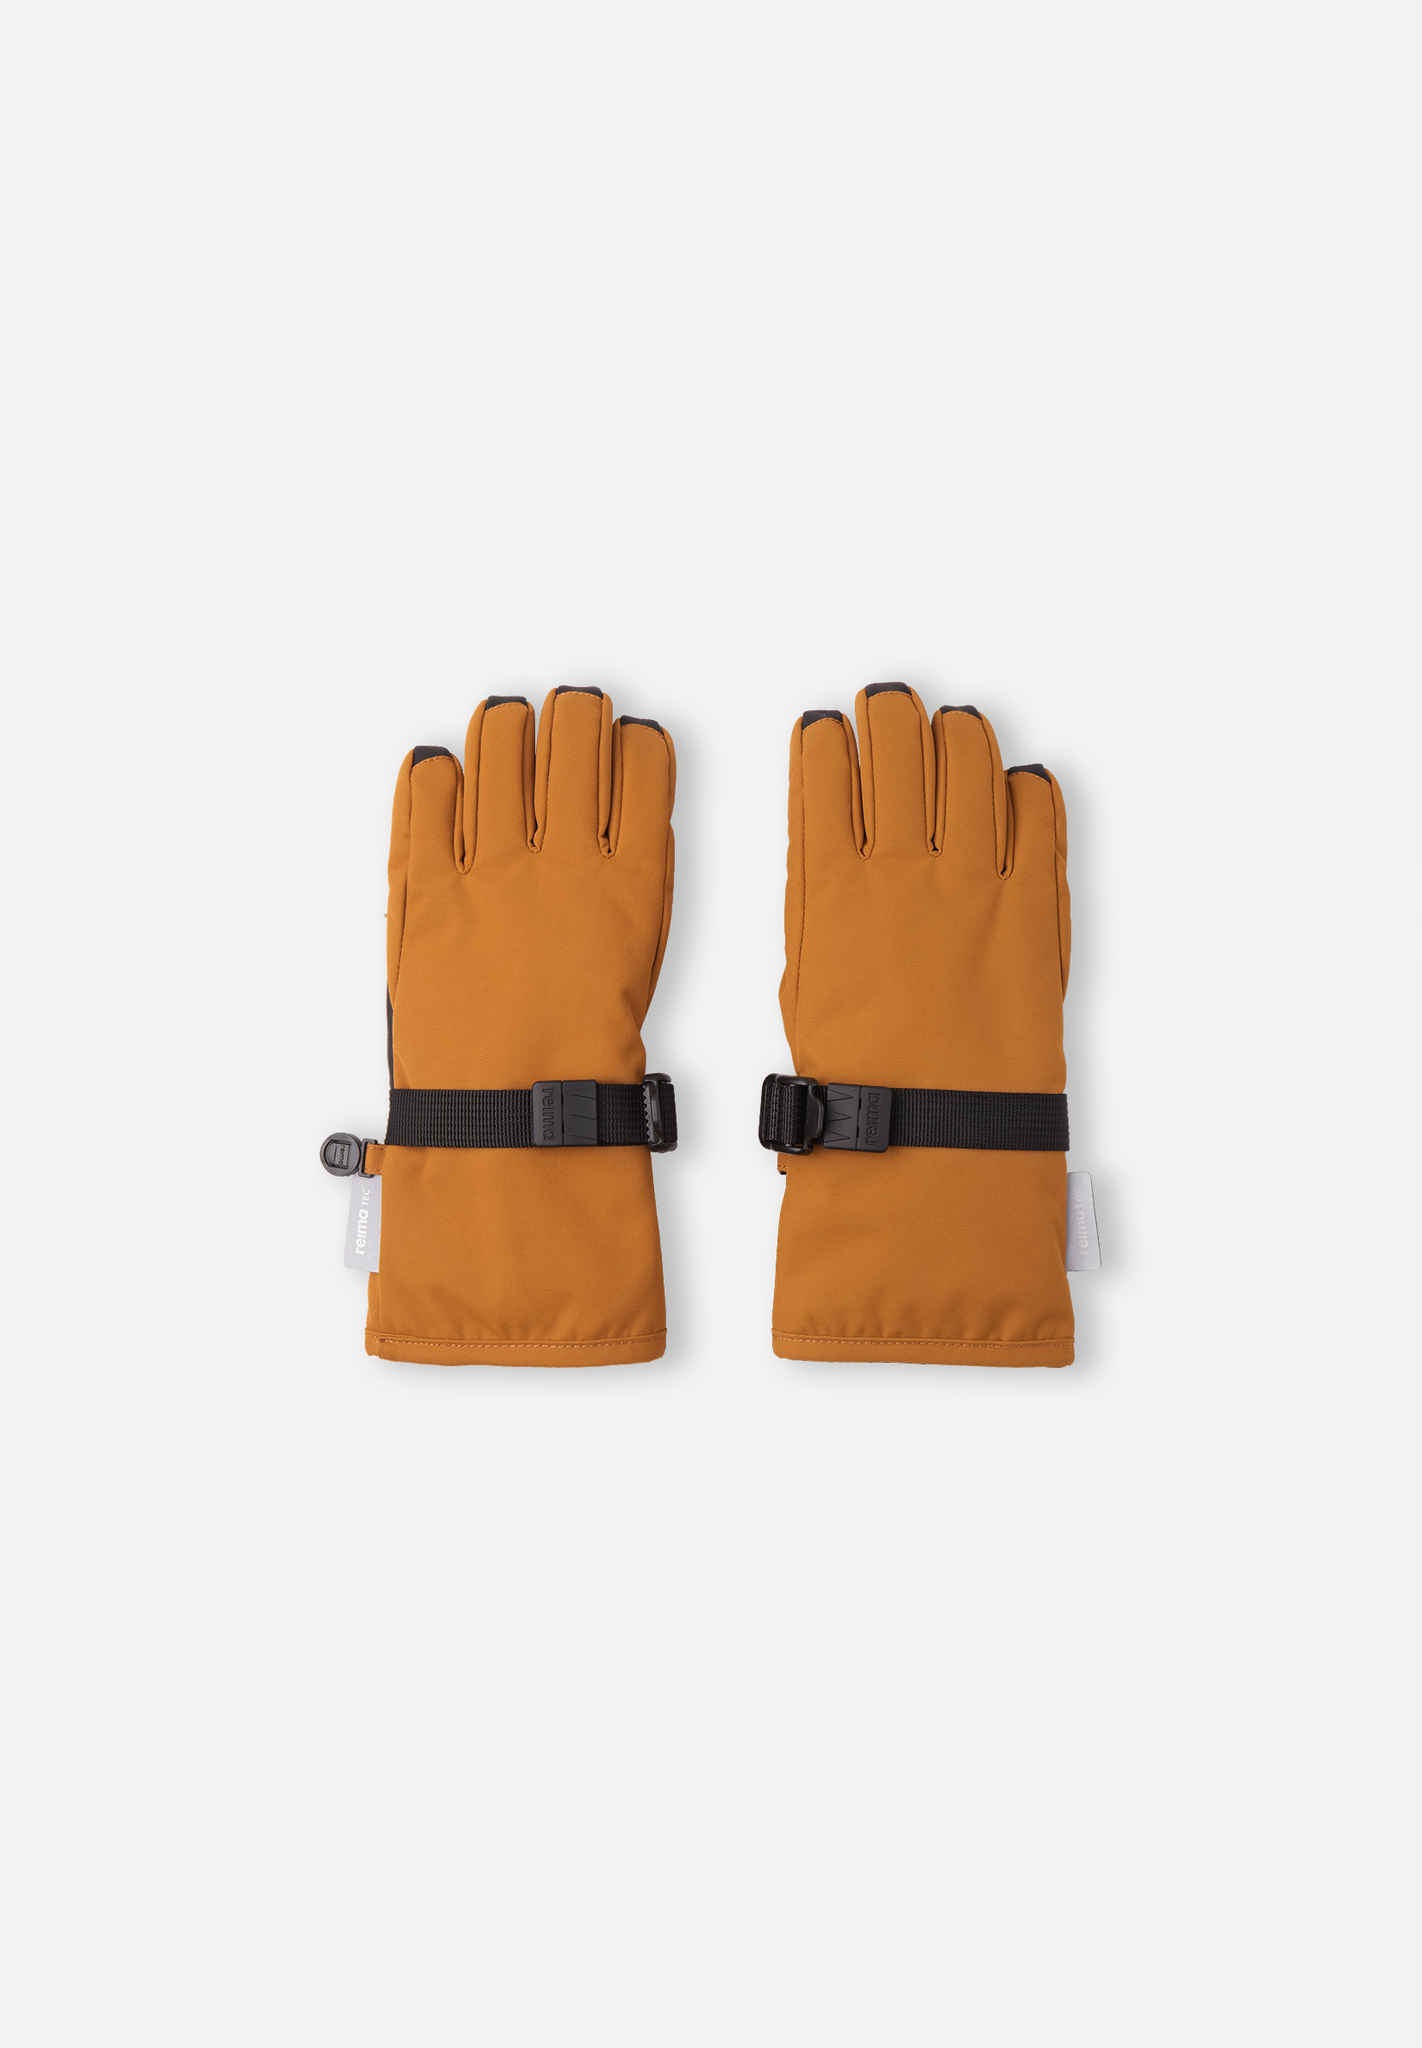 Kids Knit Gloves: A Reima Buyer's Guide | Reima USA